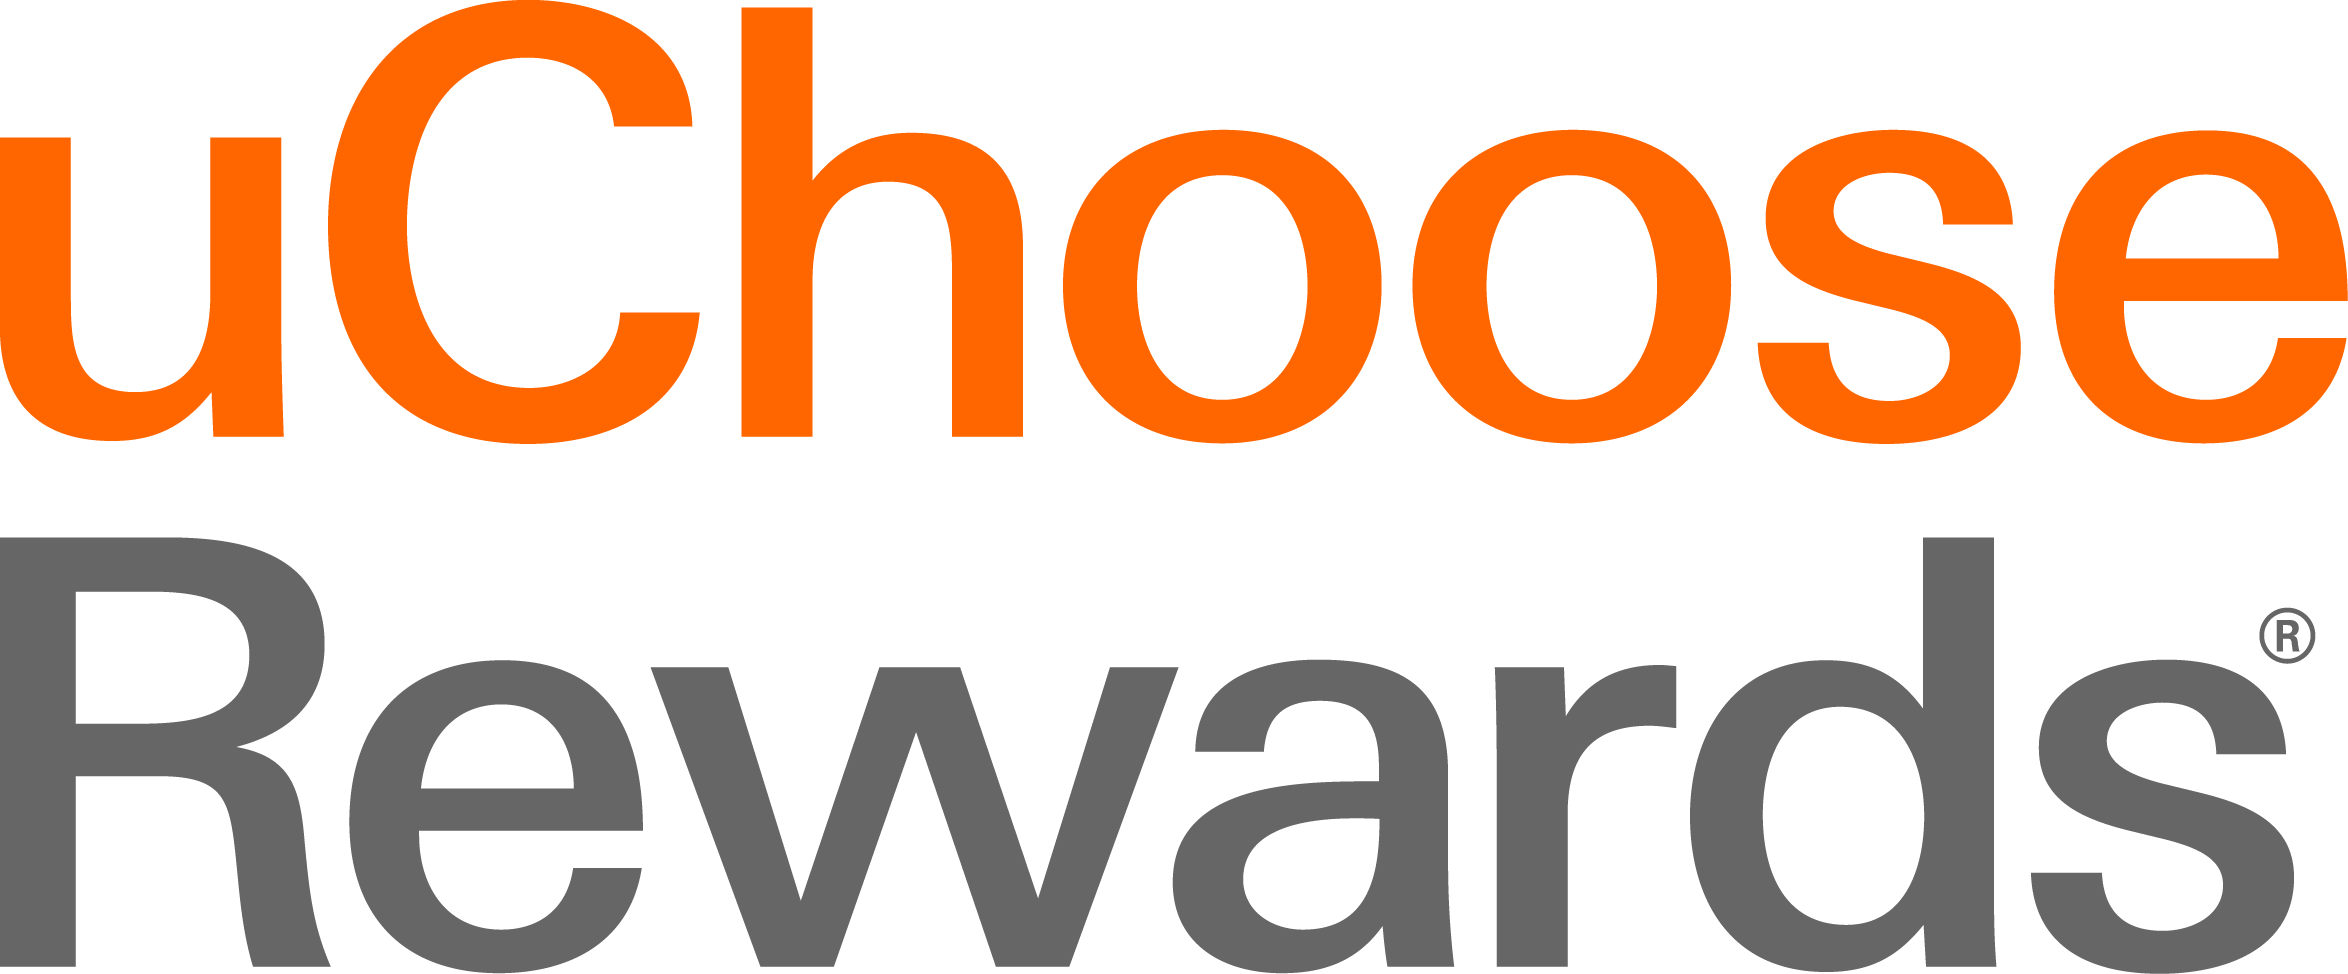 uChoose rewards logo